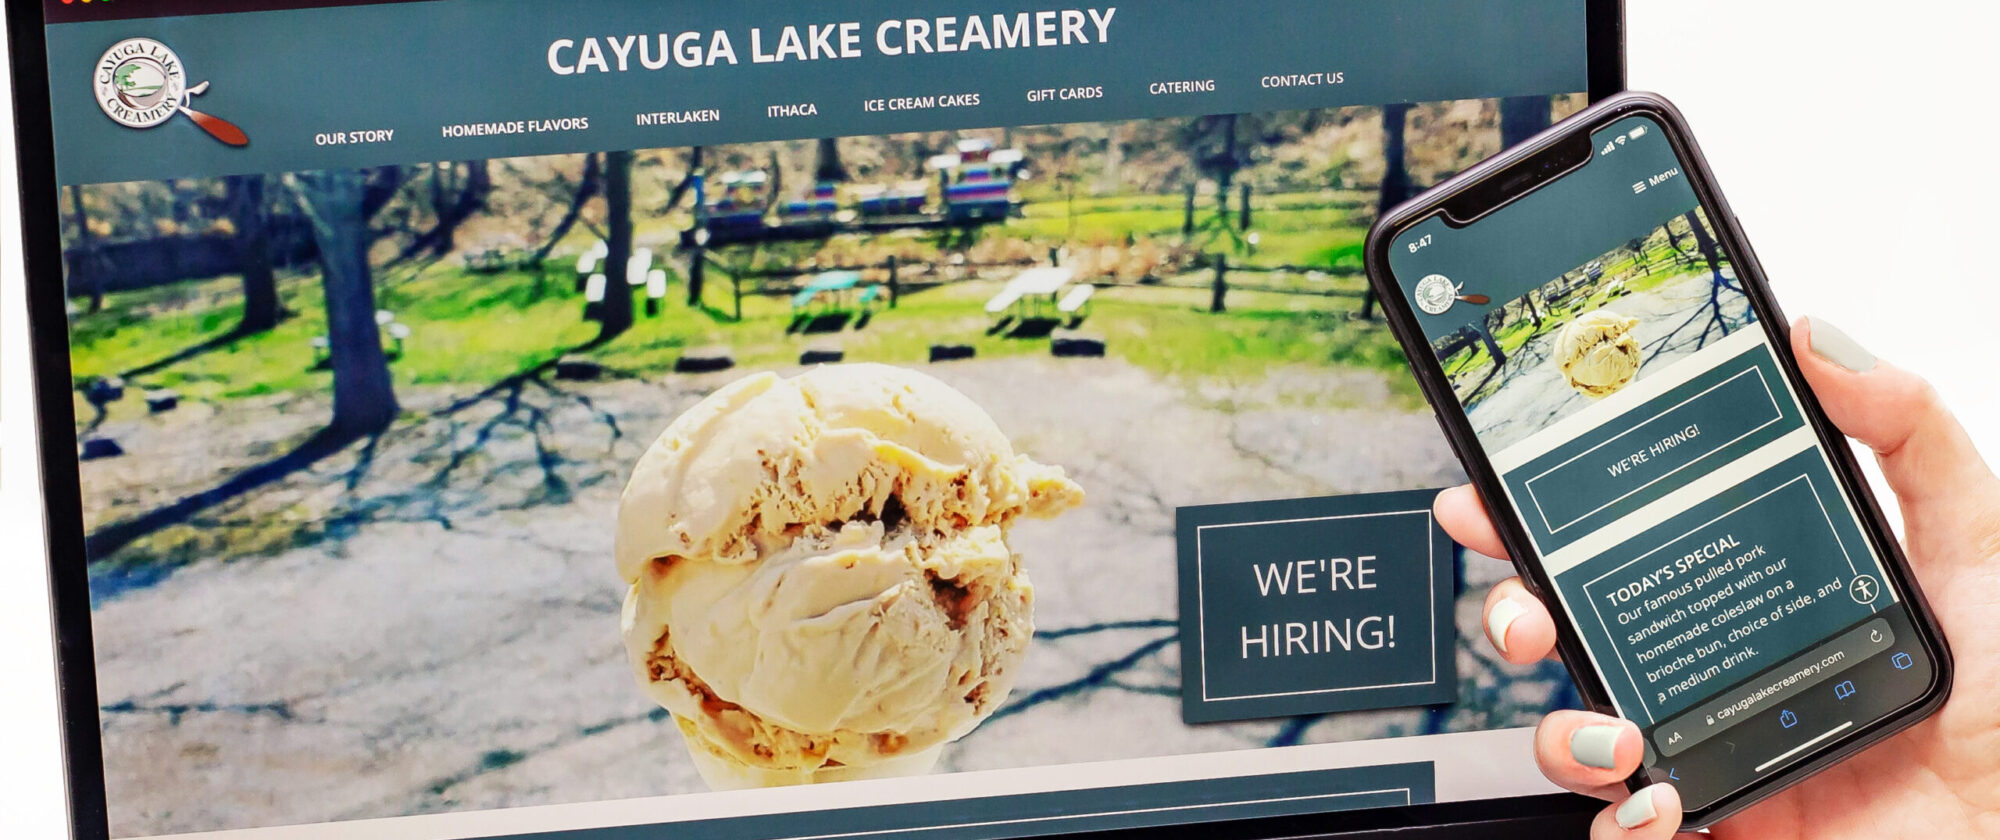 Cayuga Lake Creamery News Website Launch